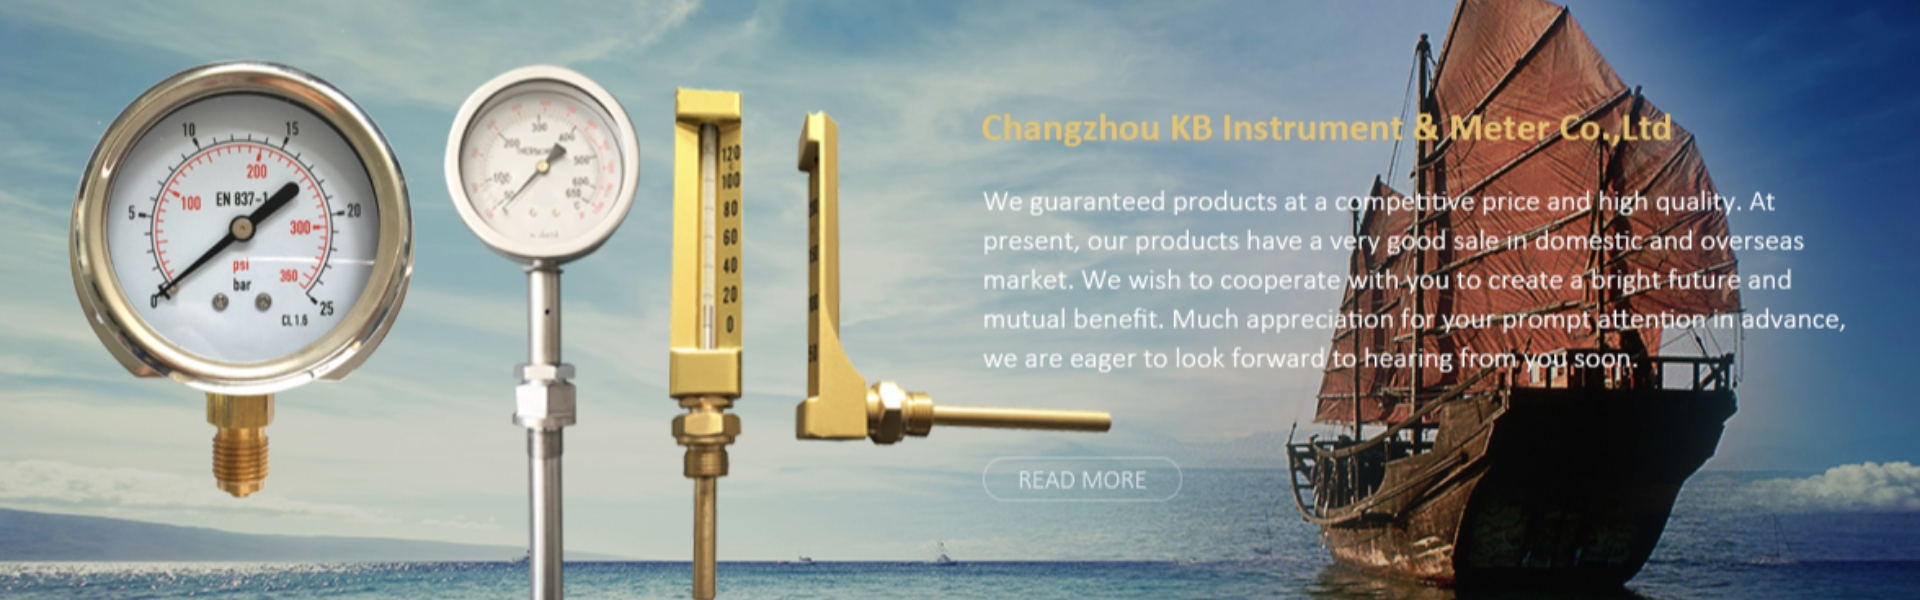 ChangZhou KB Instruments & Meter Co.,Ltd